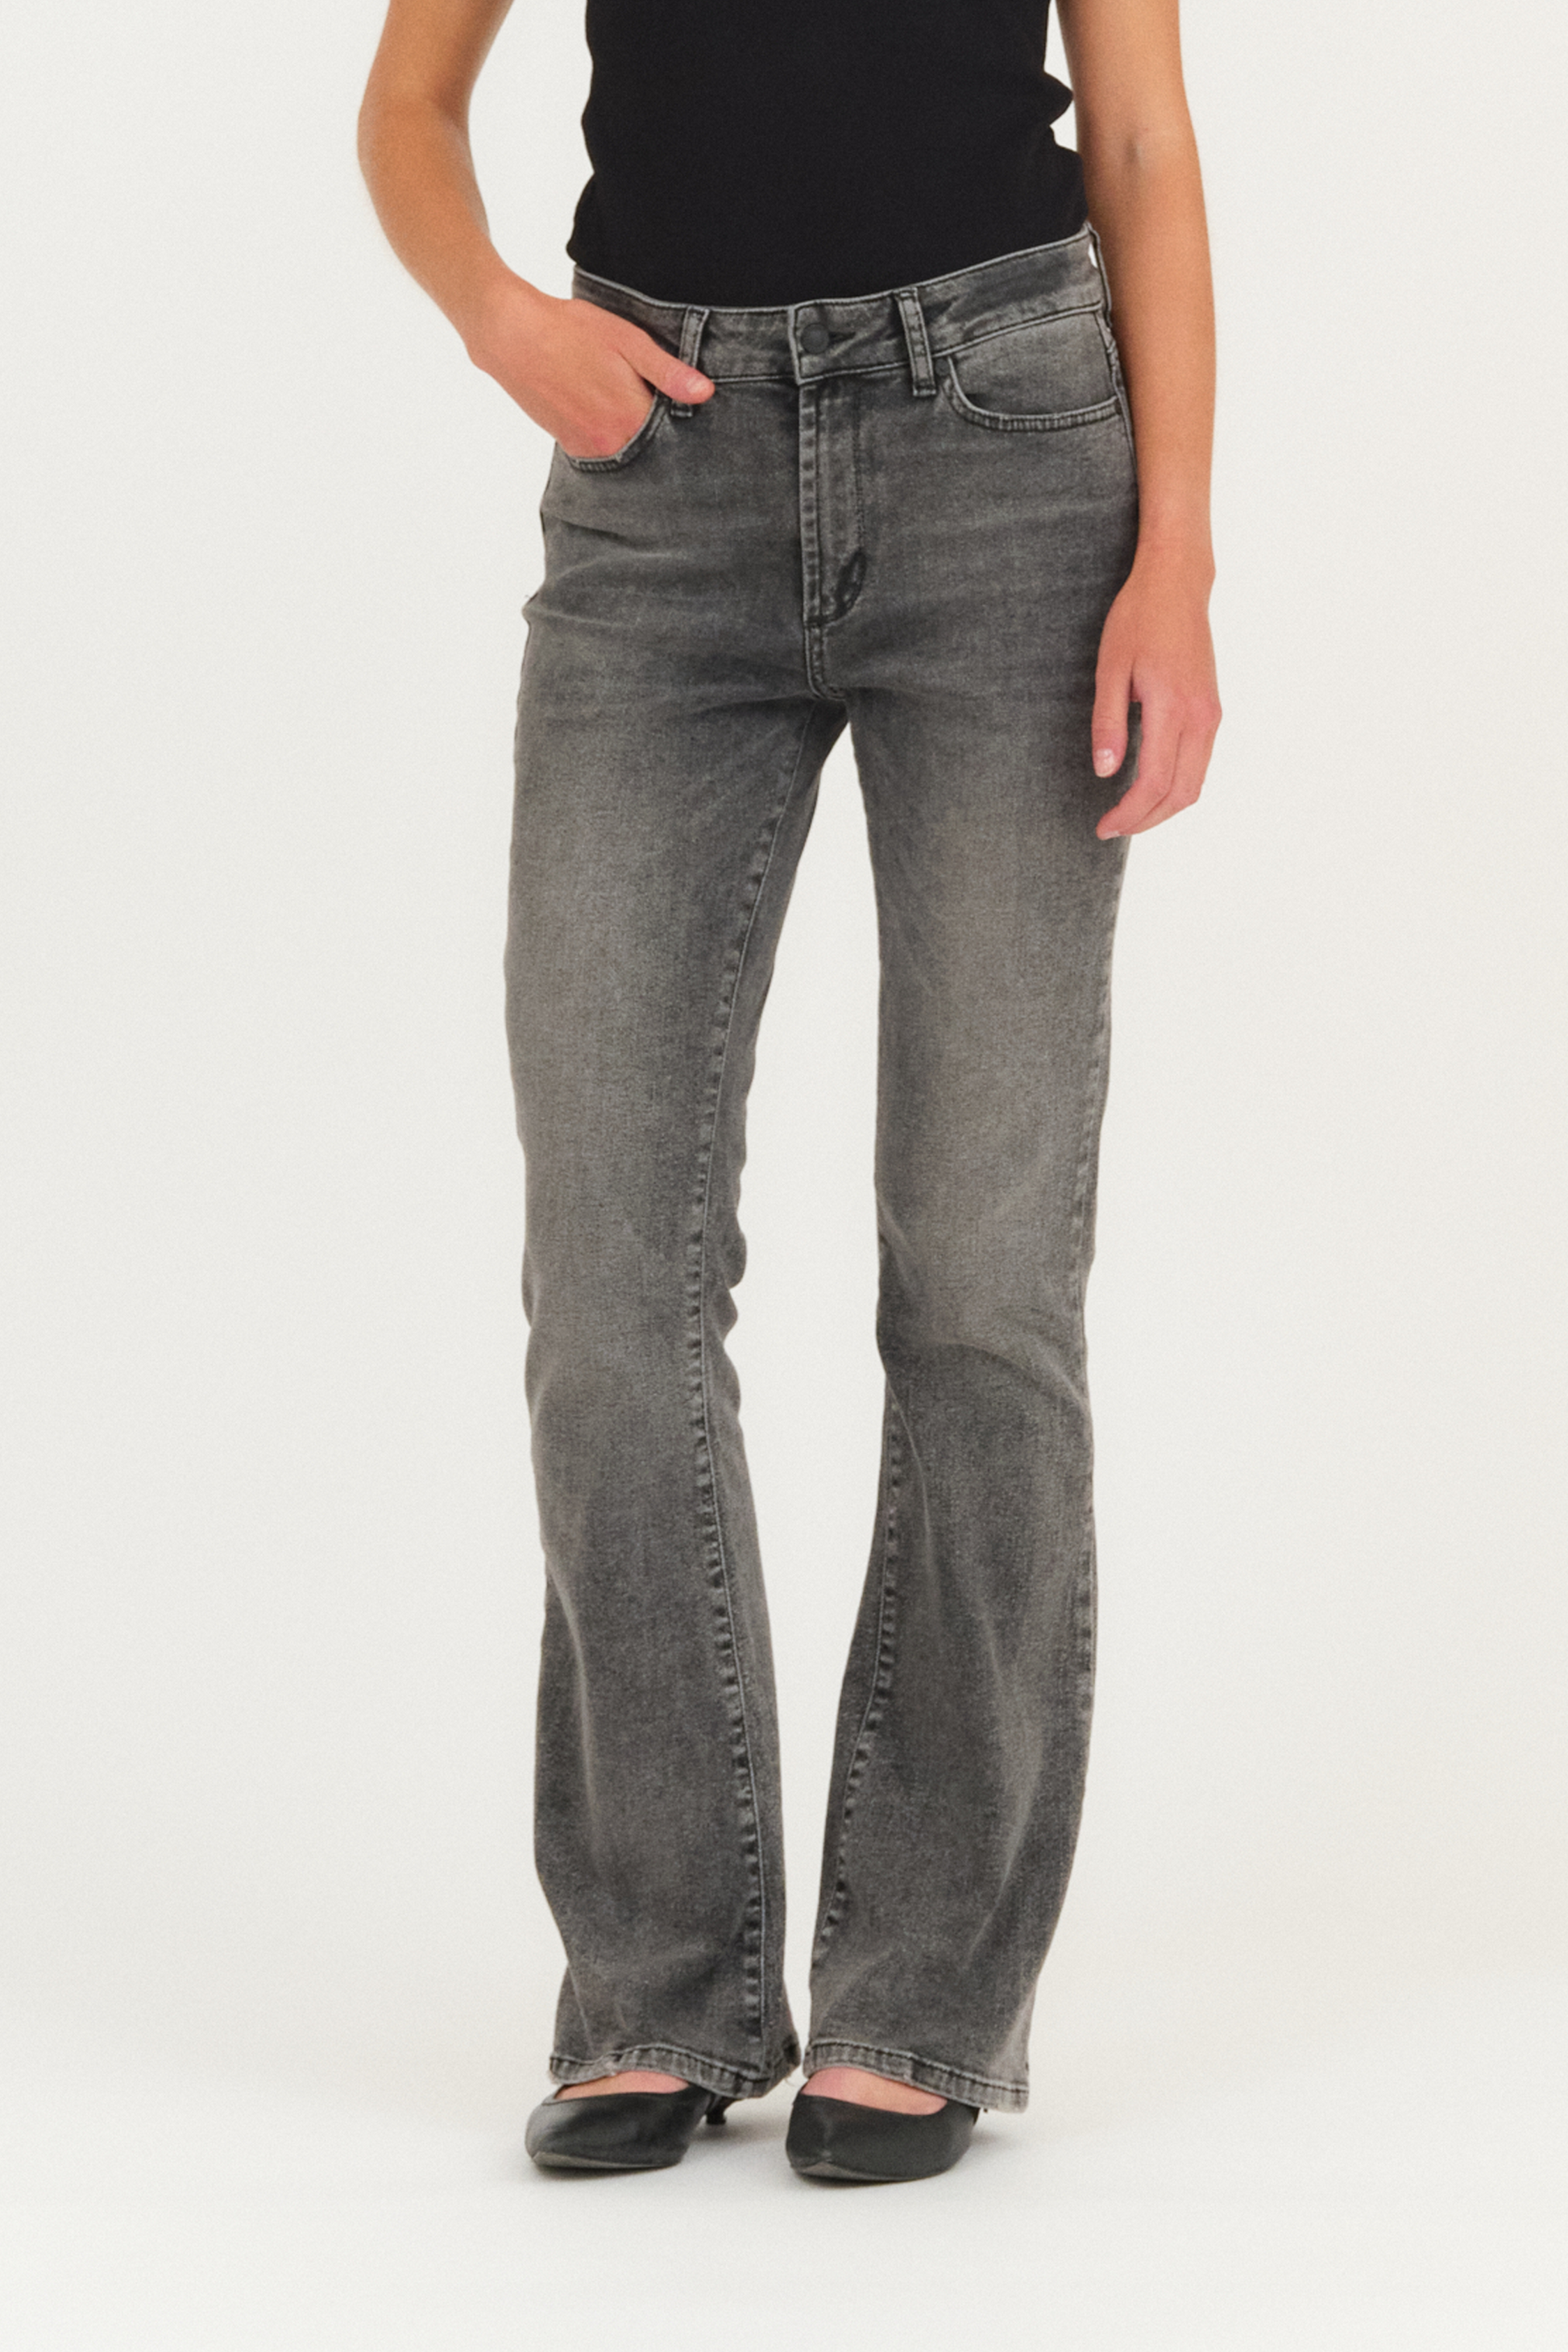 IVY Copenhagen IVY-Tara Jeans Wash Rockstar Grey Jeans & Pants 8 Grey